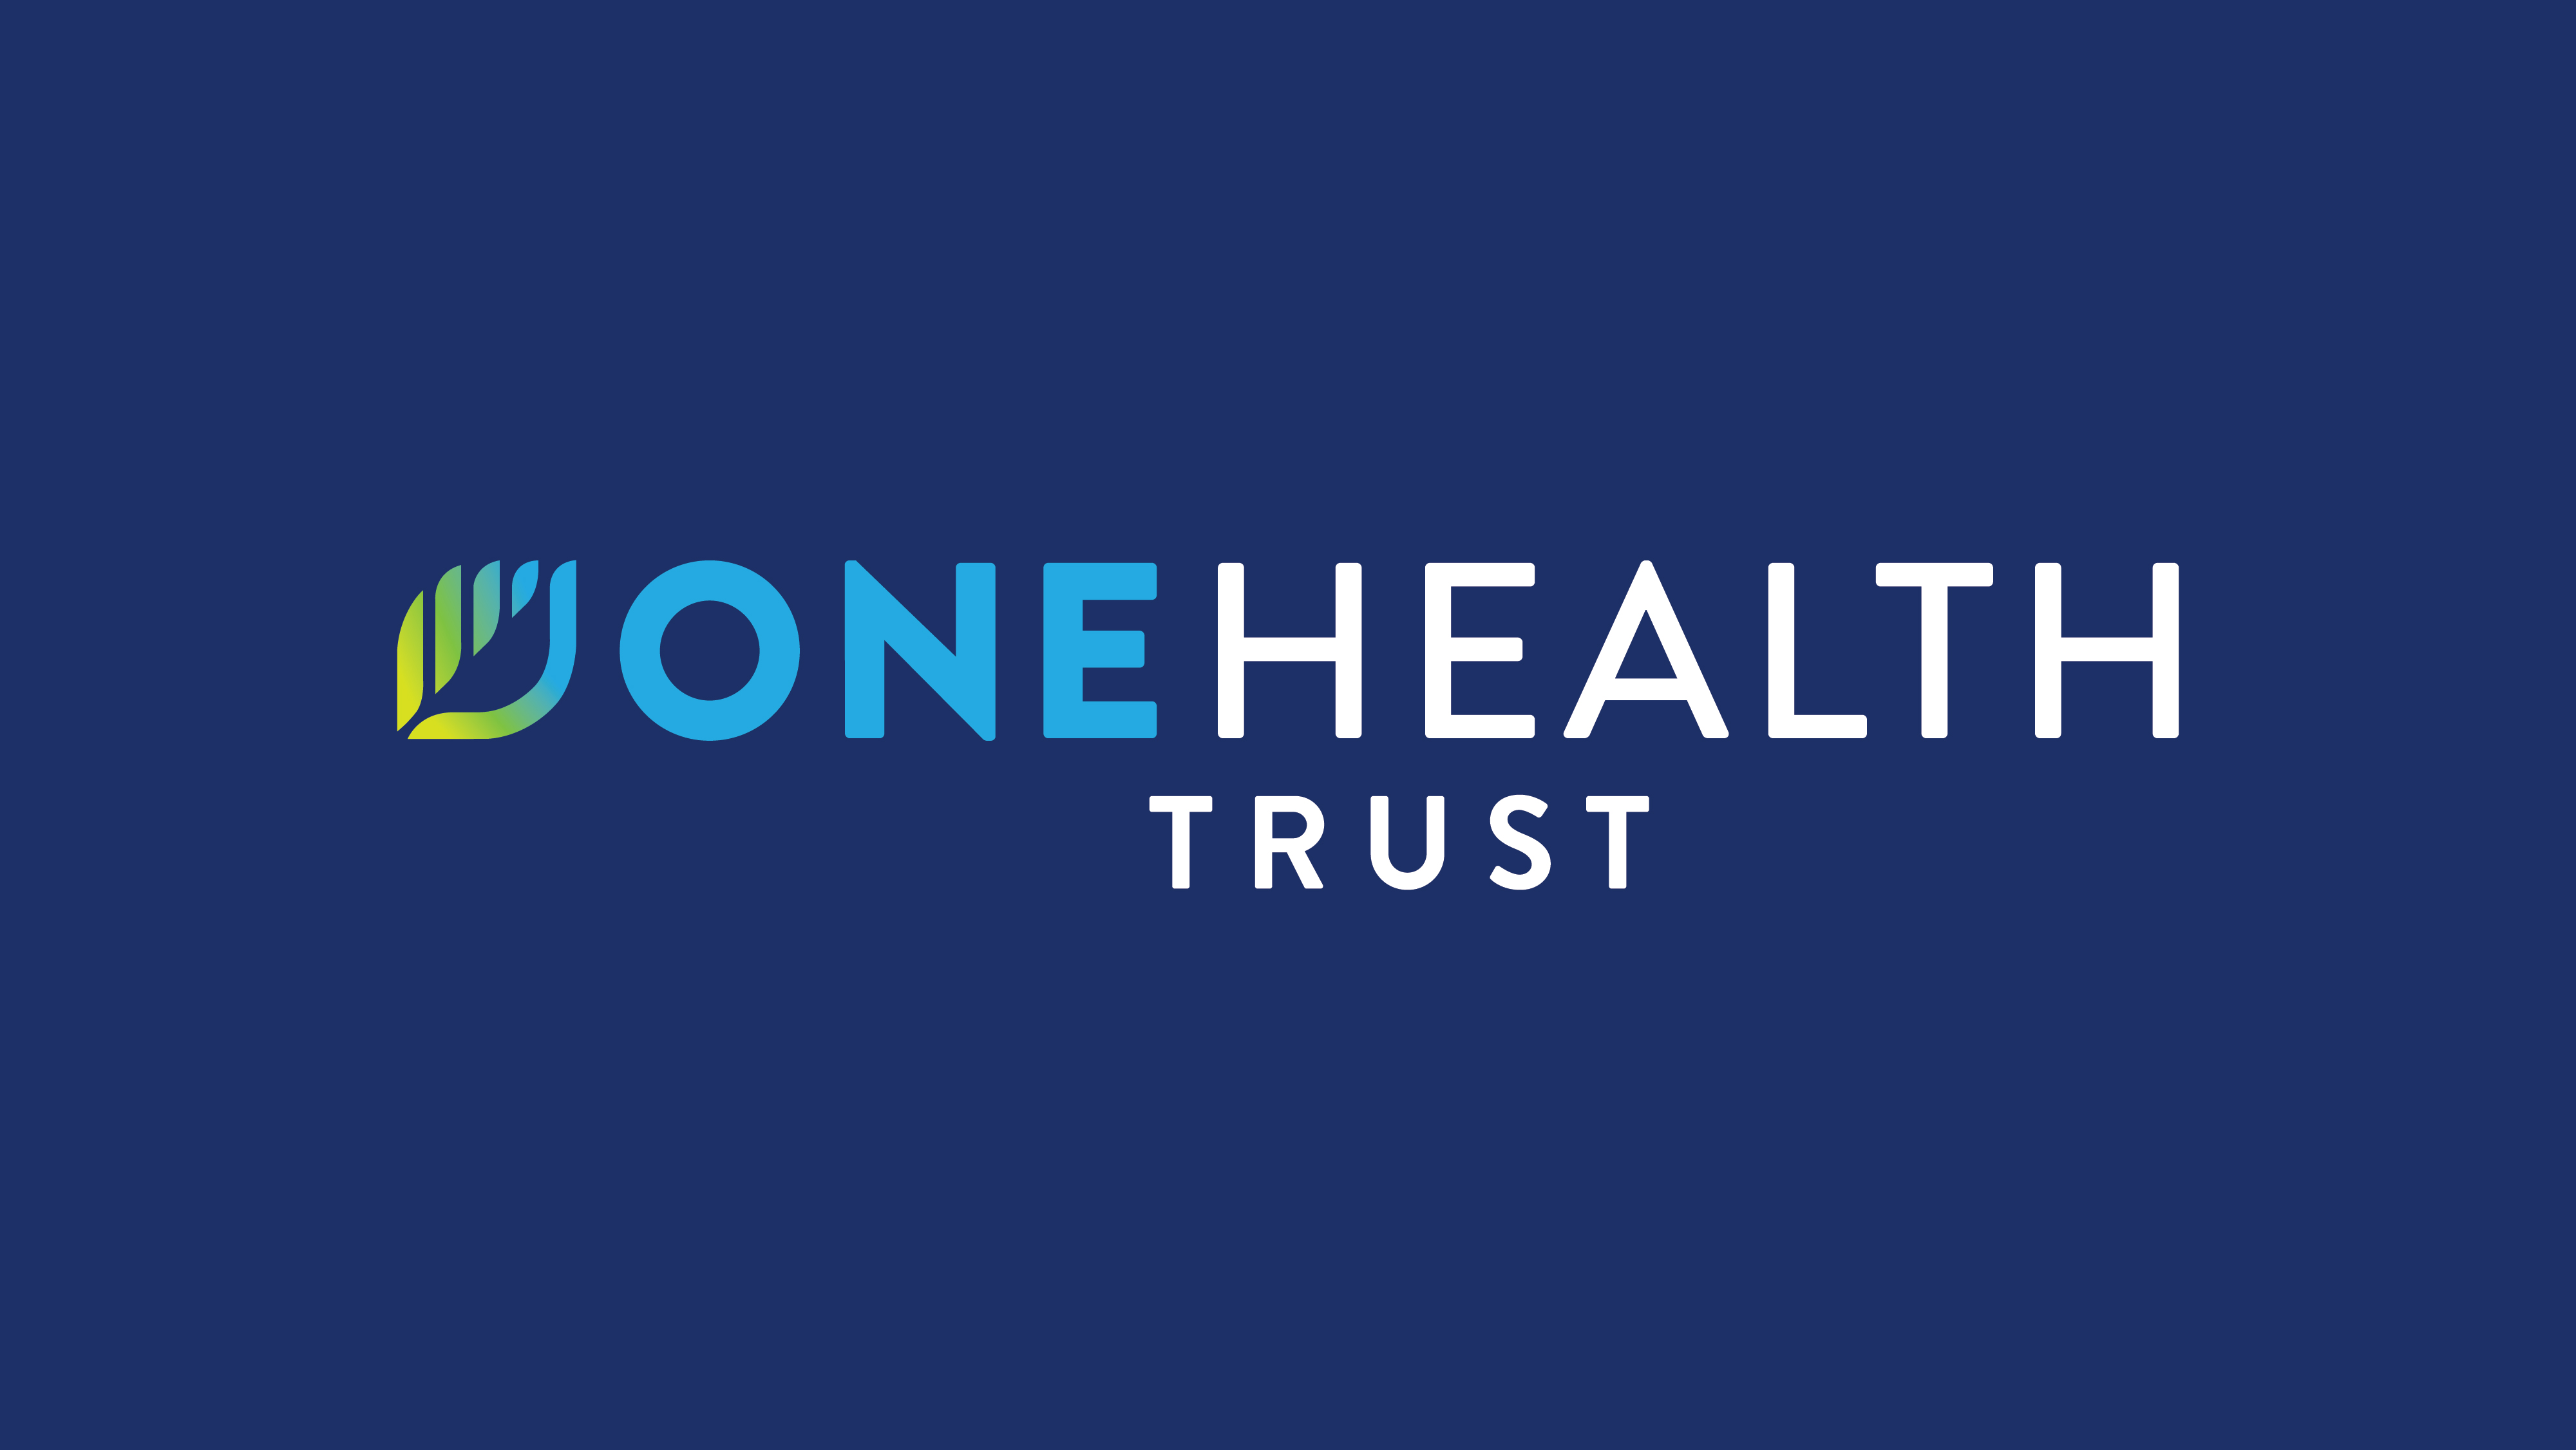 One Health Trust logo